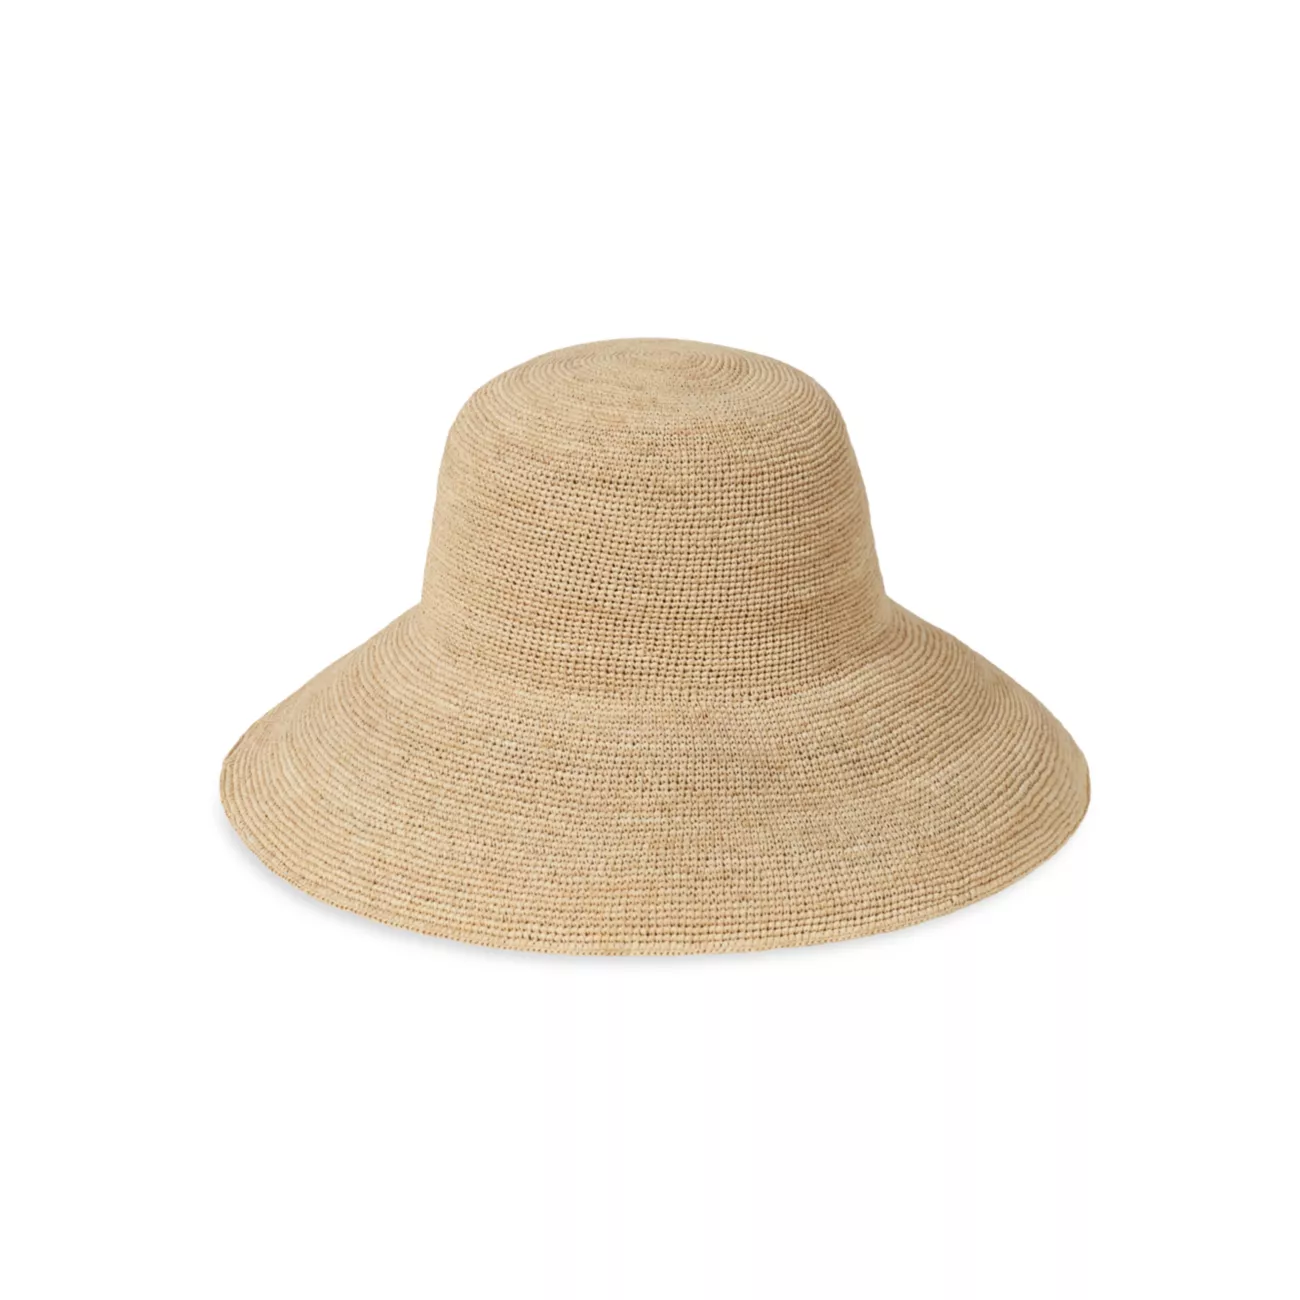 The Inca Straw Sun Hat Lack of Color